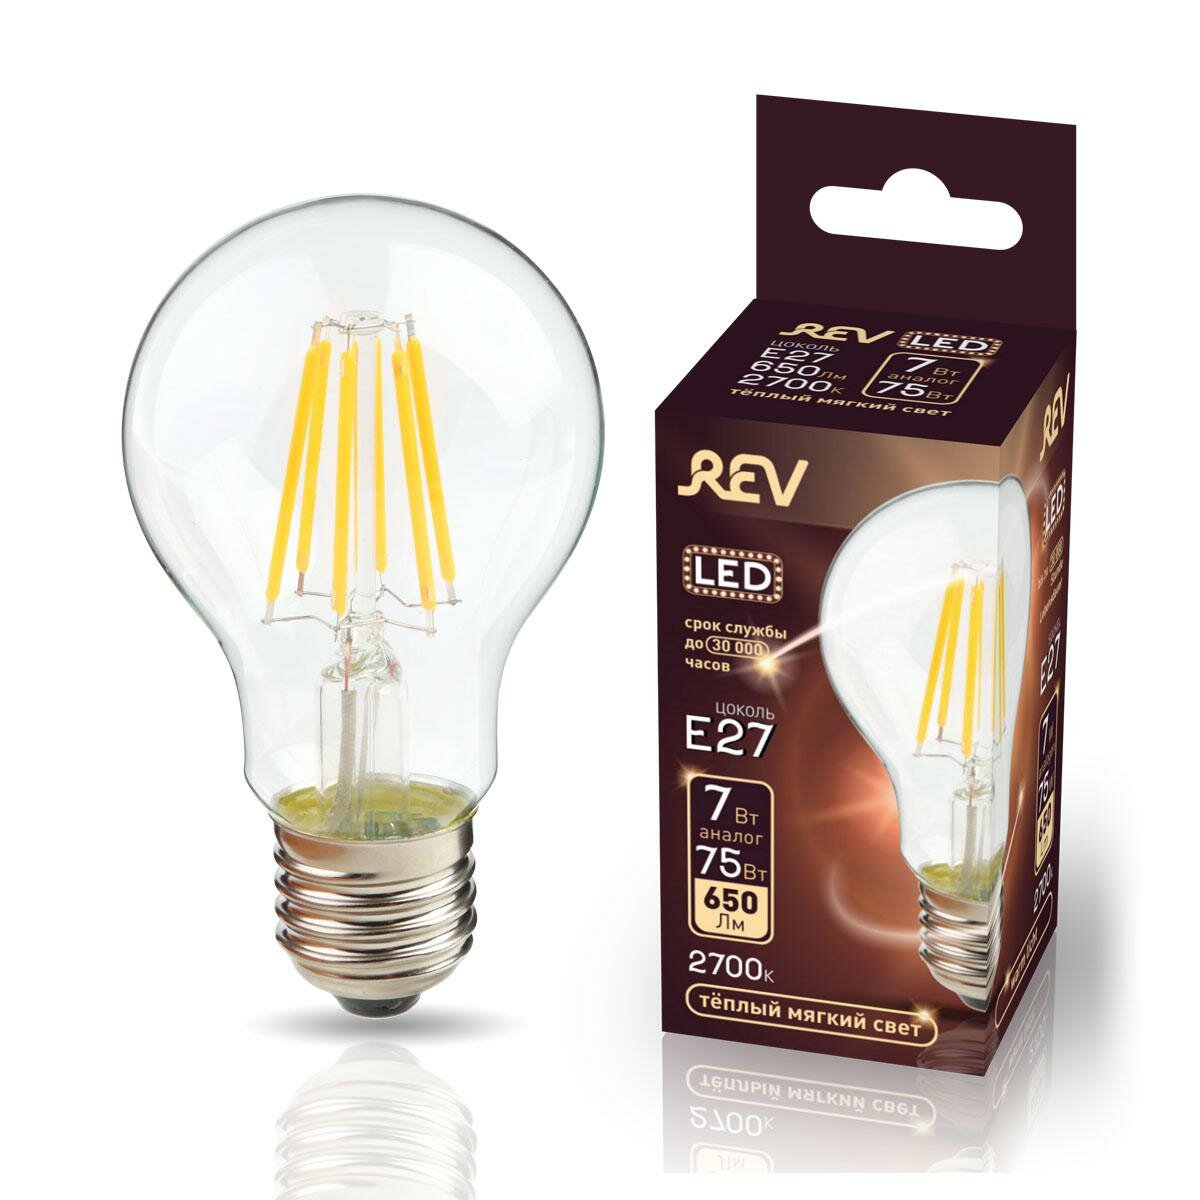 Лампа светодиодная Rev ritter - фото №18